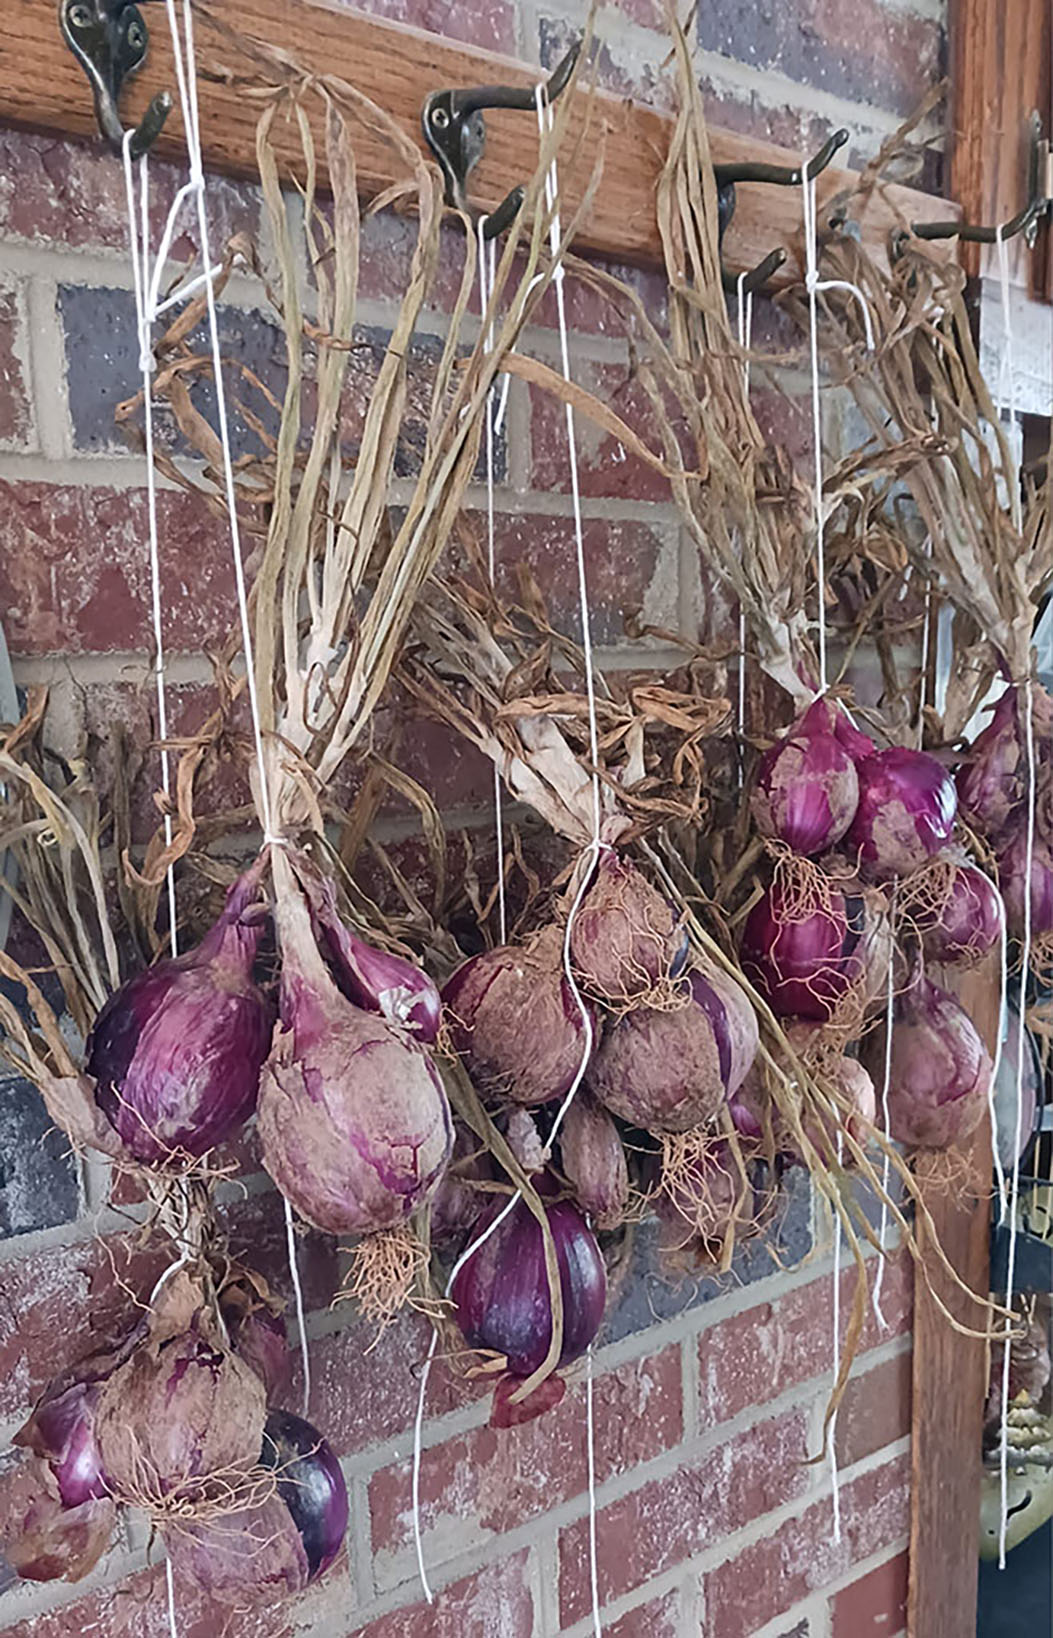 Hanging Onions